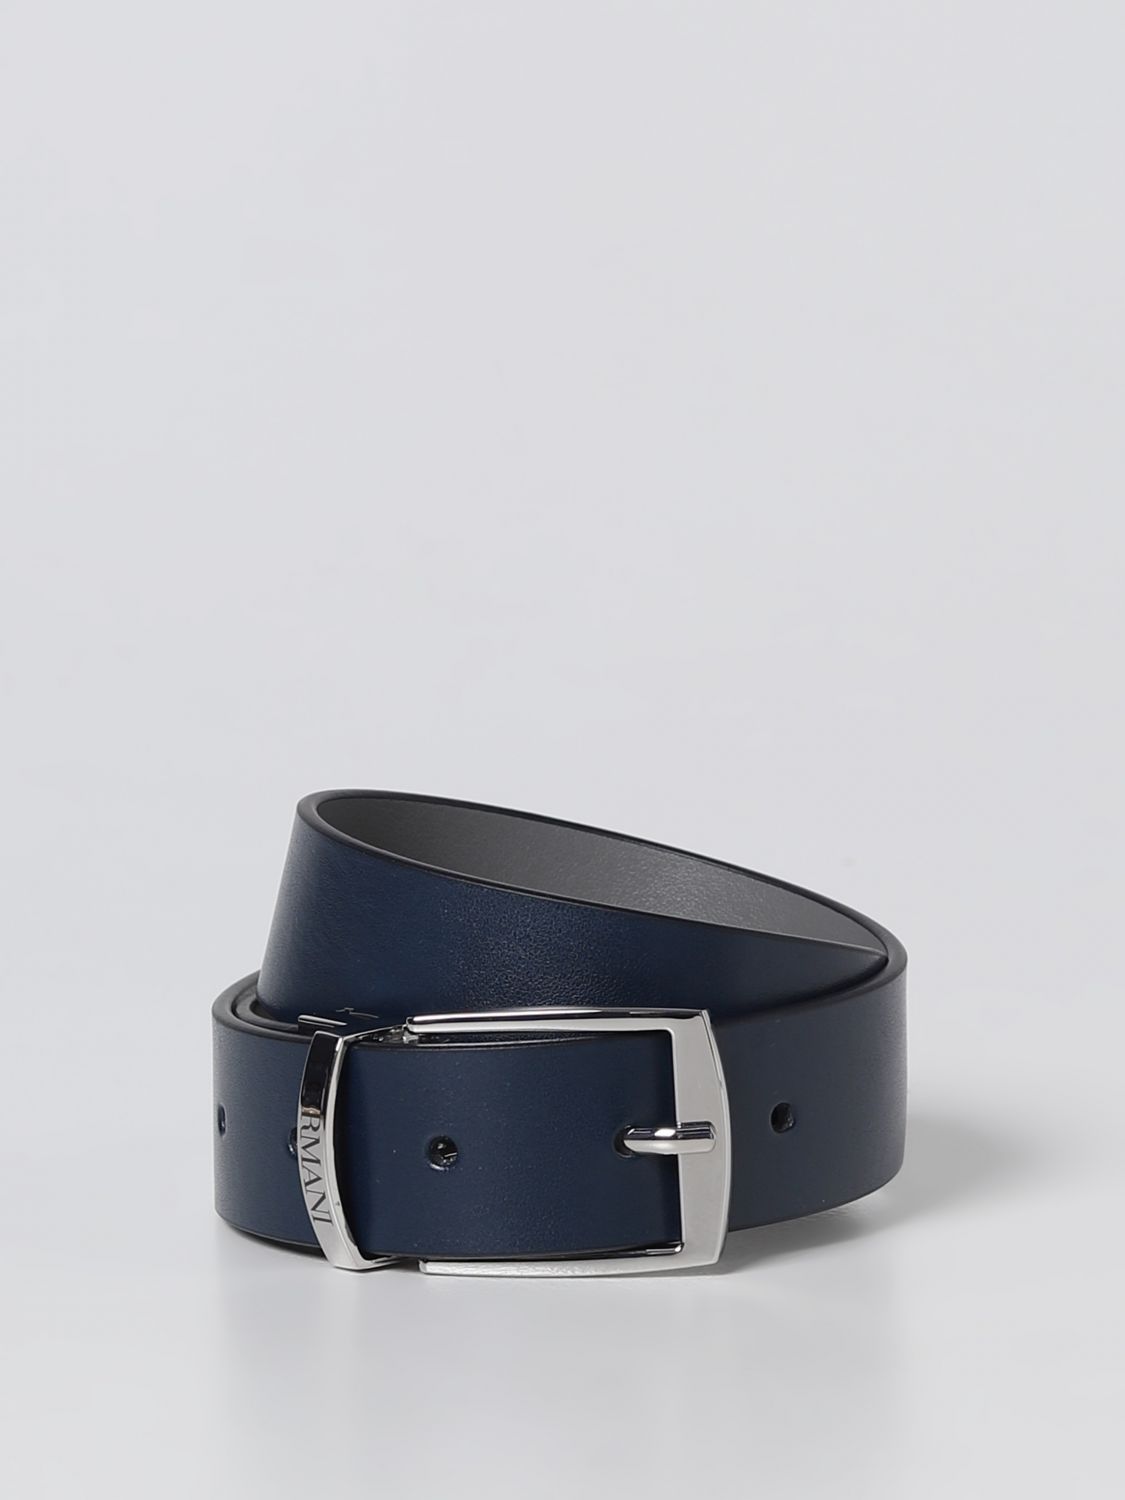 Winkelier wanhoop Tomaat EMPORIO ARMANI KIDS: belt for kids - Blue | Emporio Armani Kids belt  4015203R560 online on GIGLIO.COM